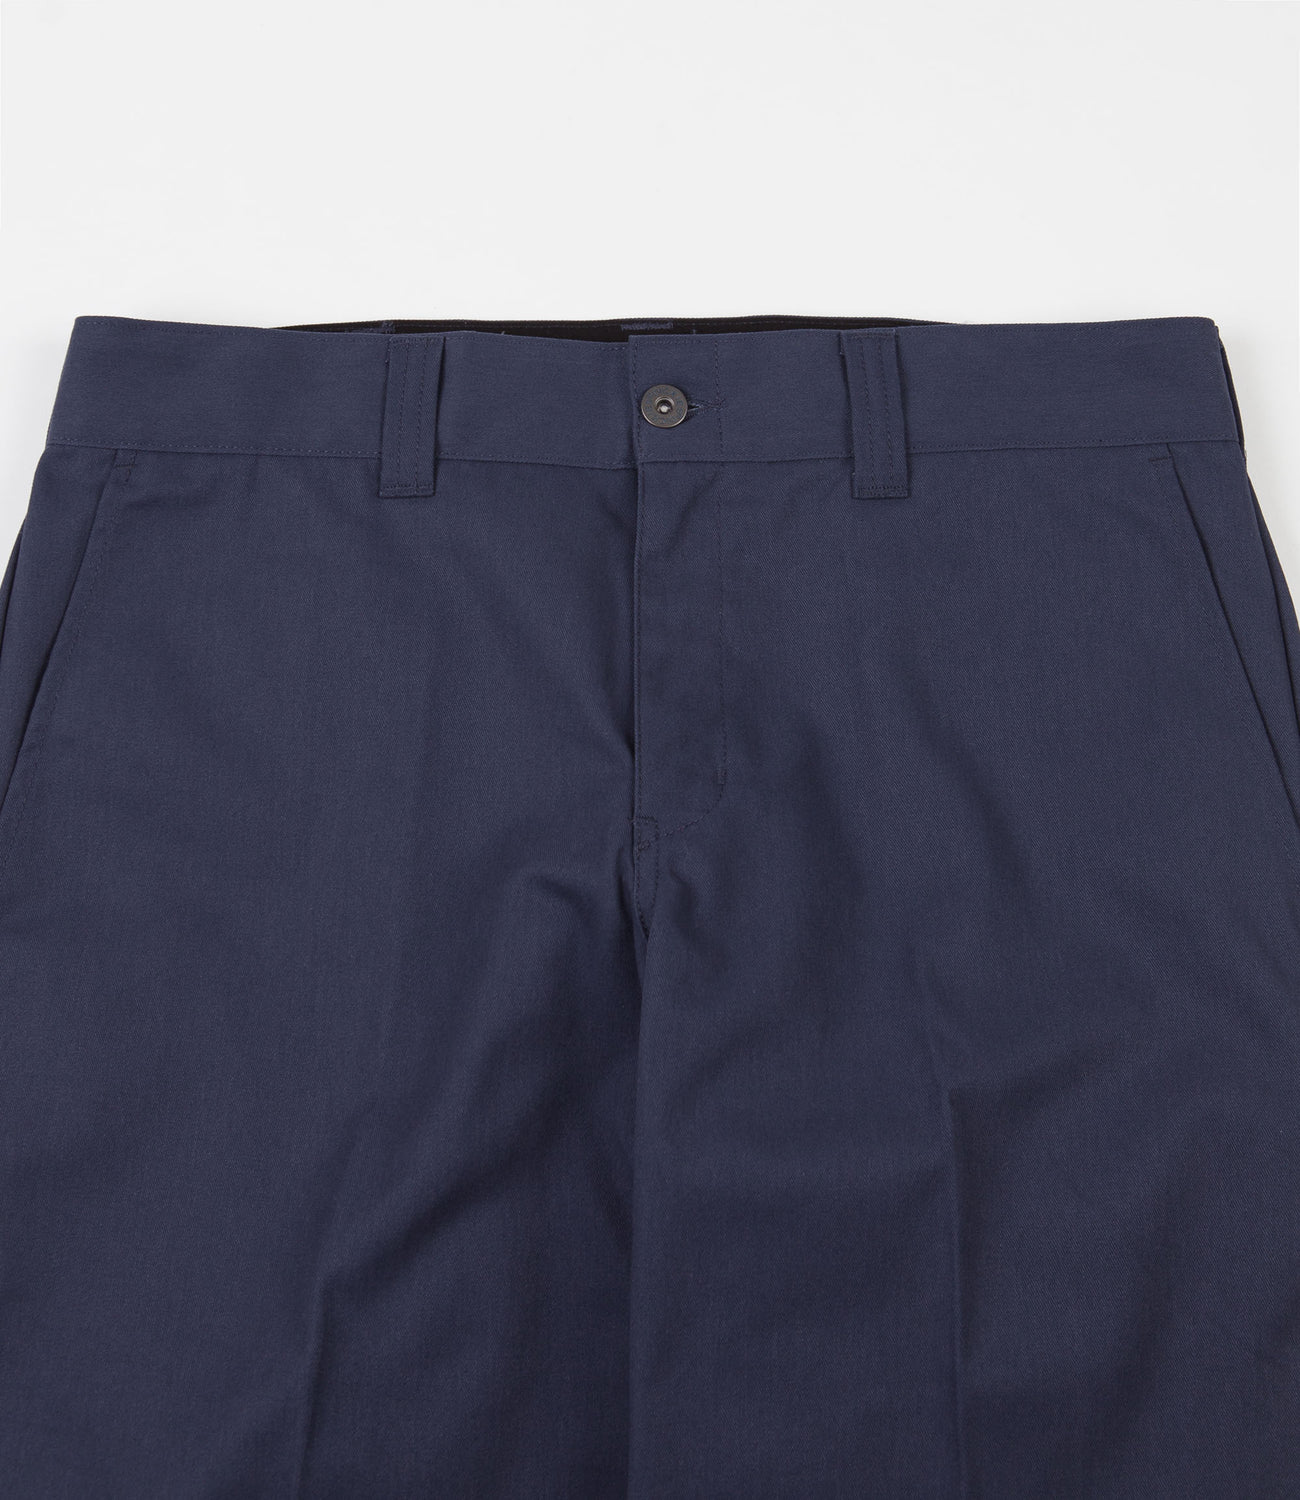 Dickies 894 Industrial Work Trousers - Navy Blue | Flatspot